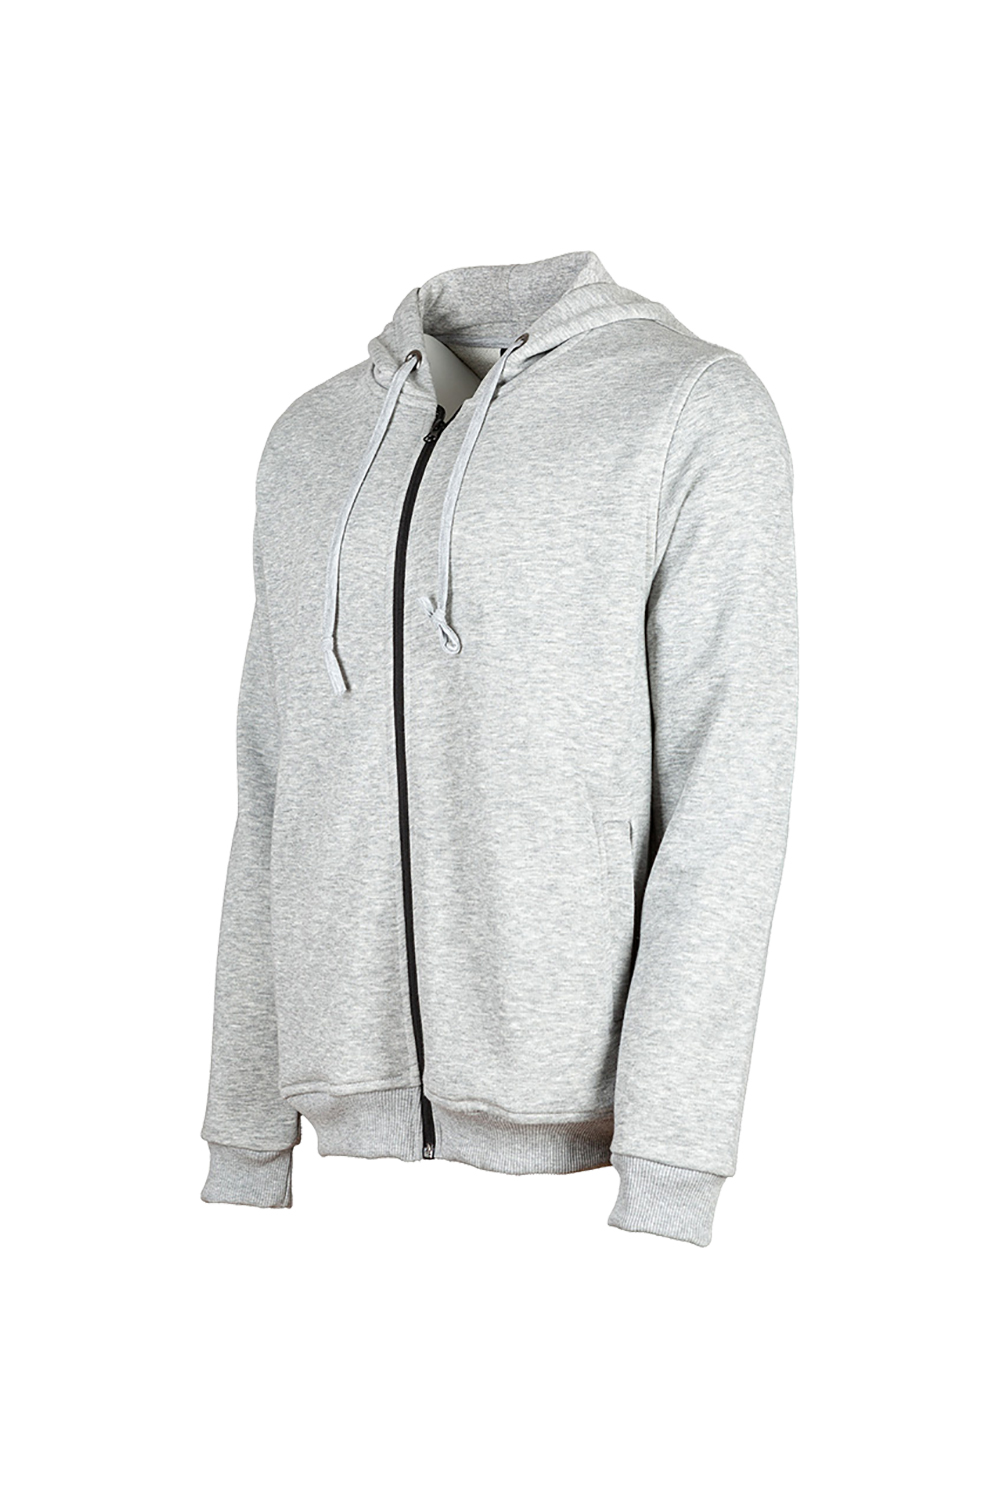  / Hooded Sweatshirt / Workwear